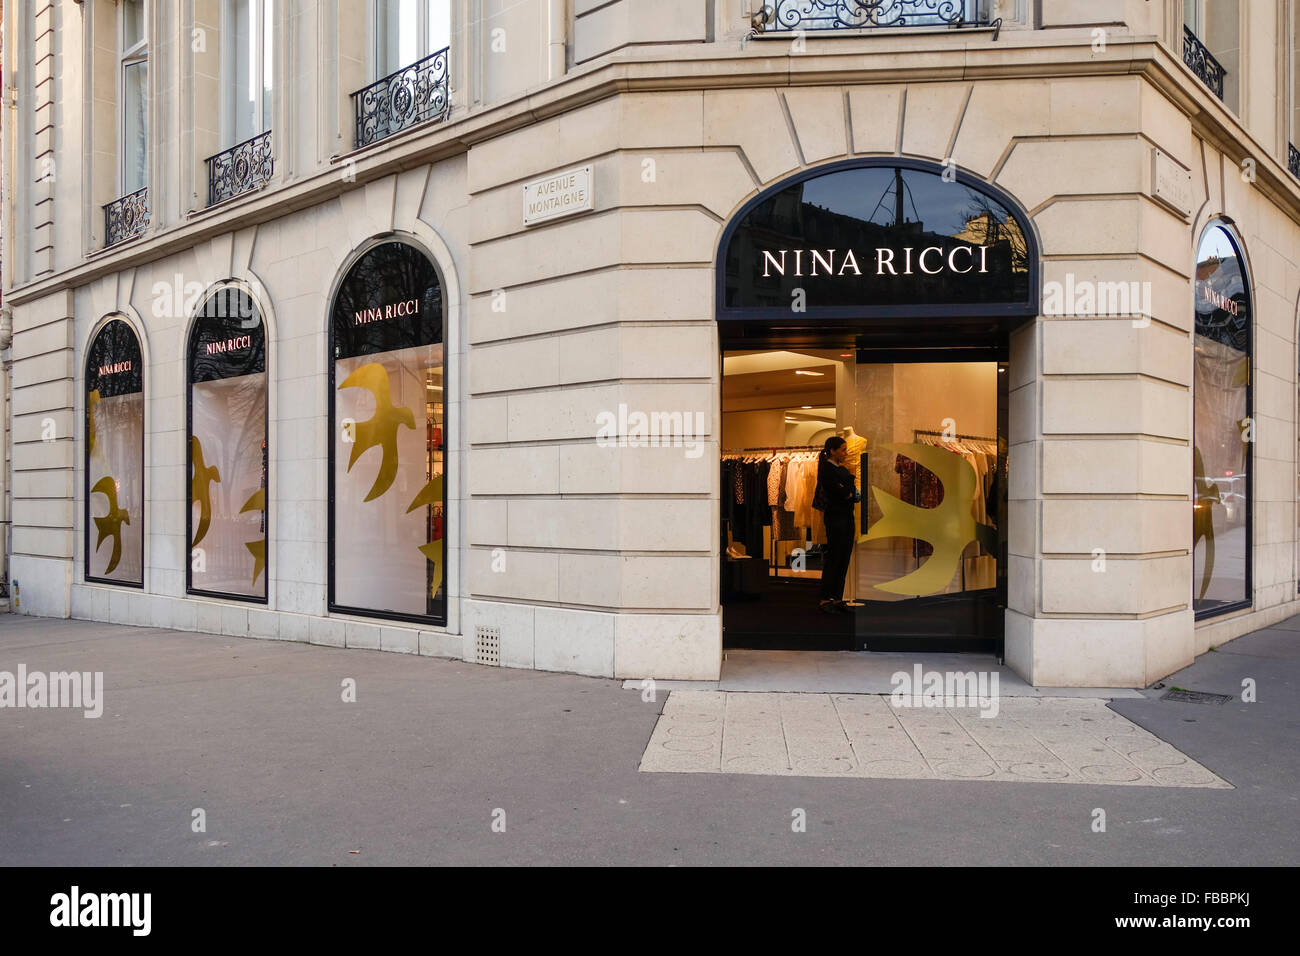 Nina ricci shop avenue montaigne hi-res stock photography and images - Alamy